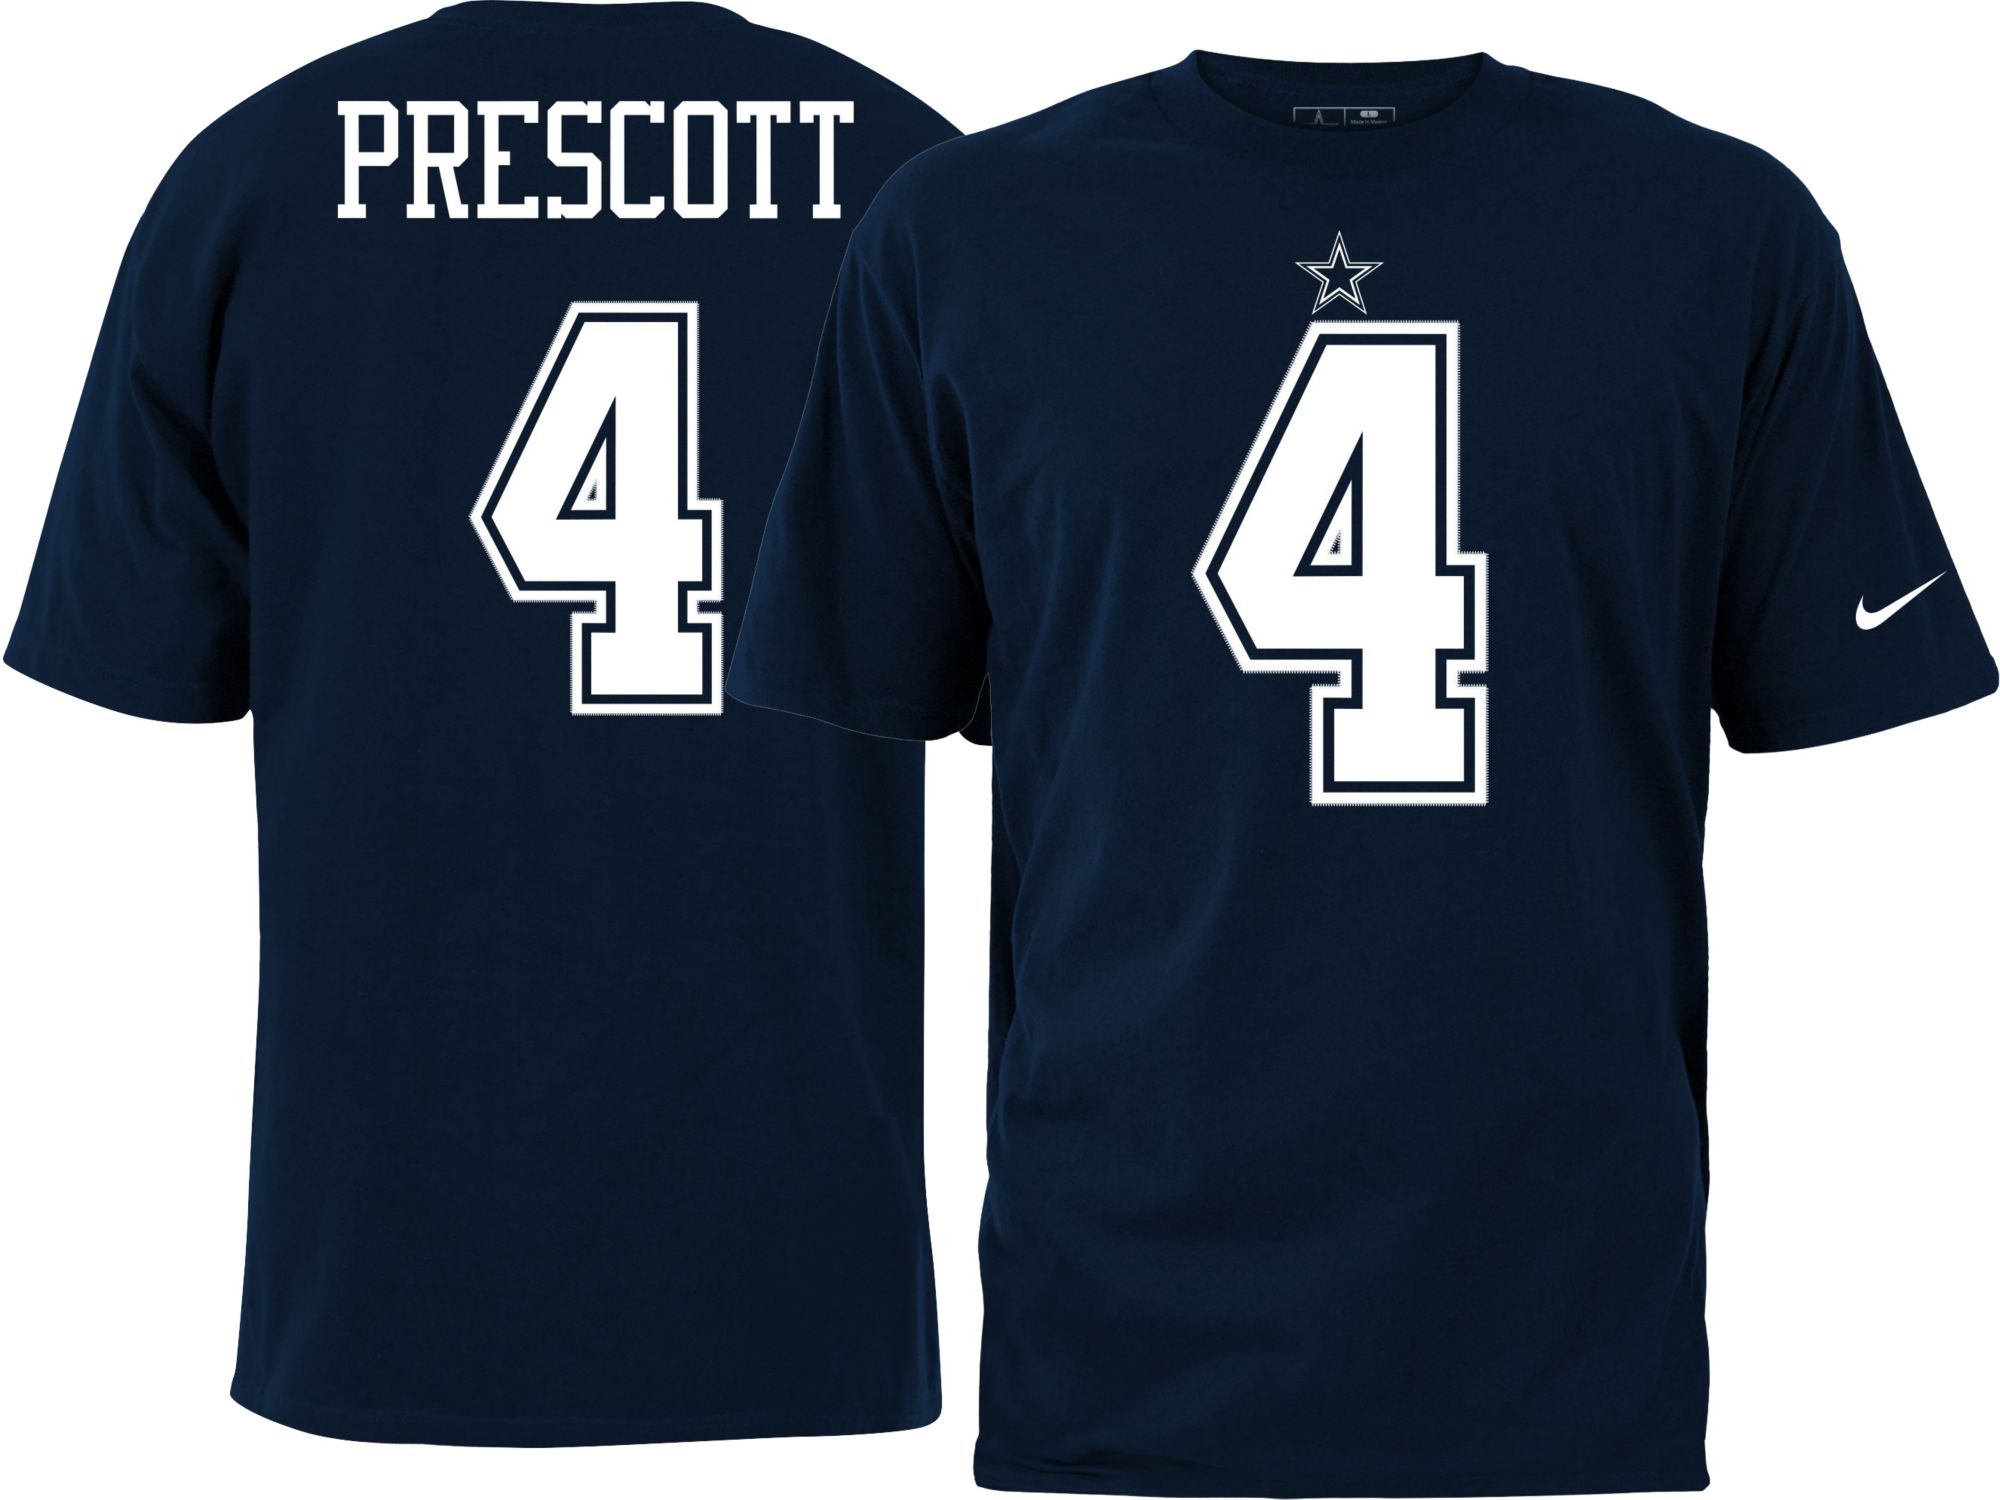 prescott shirt